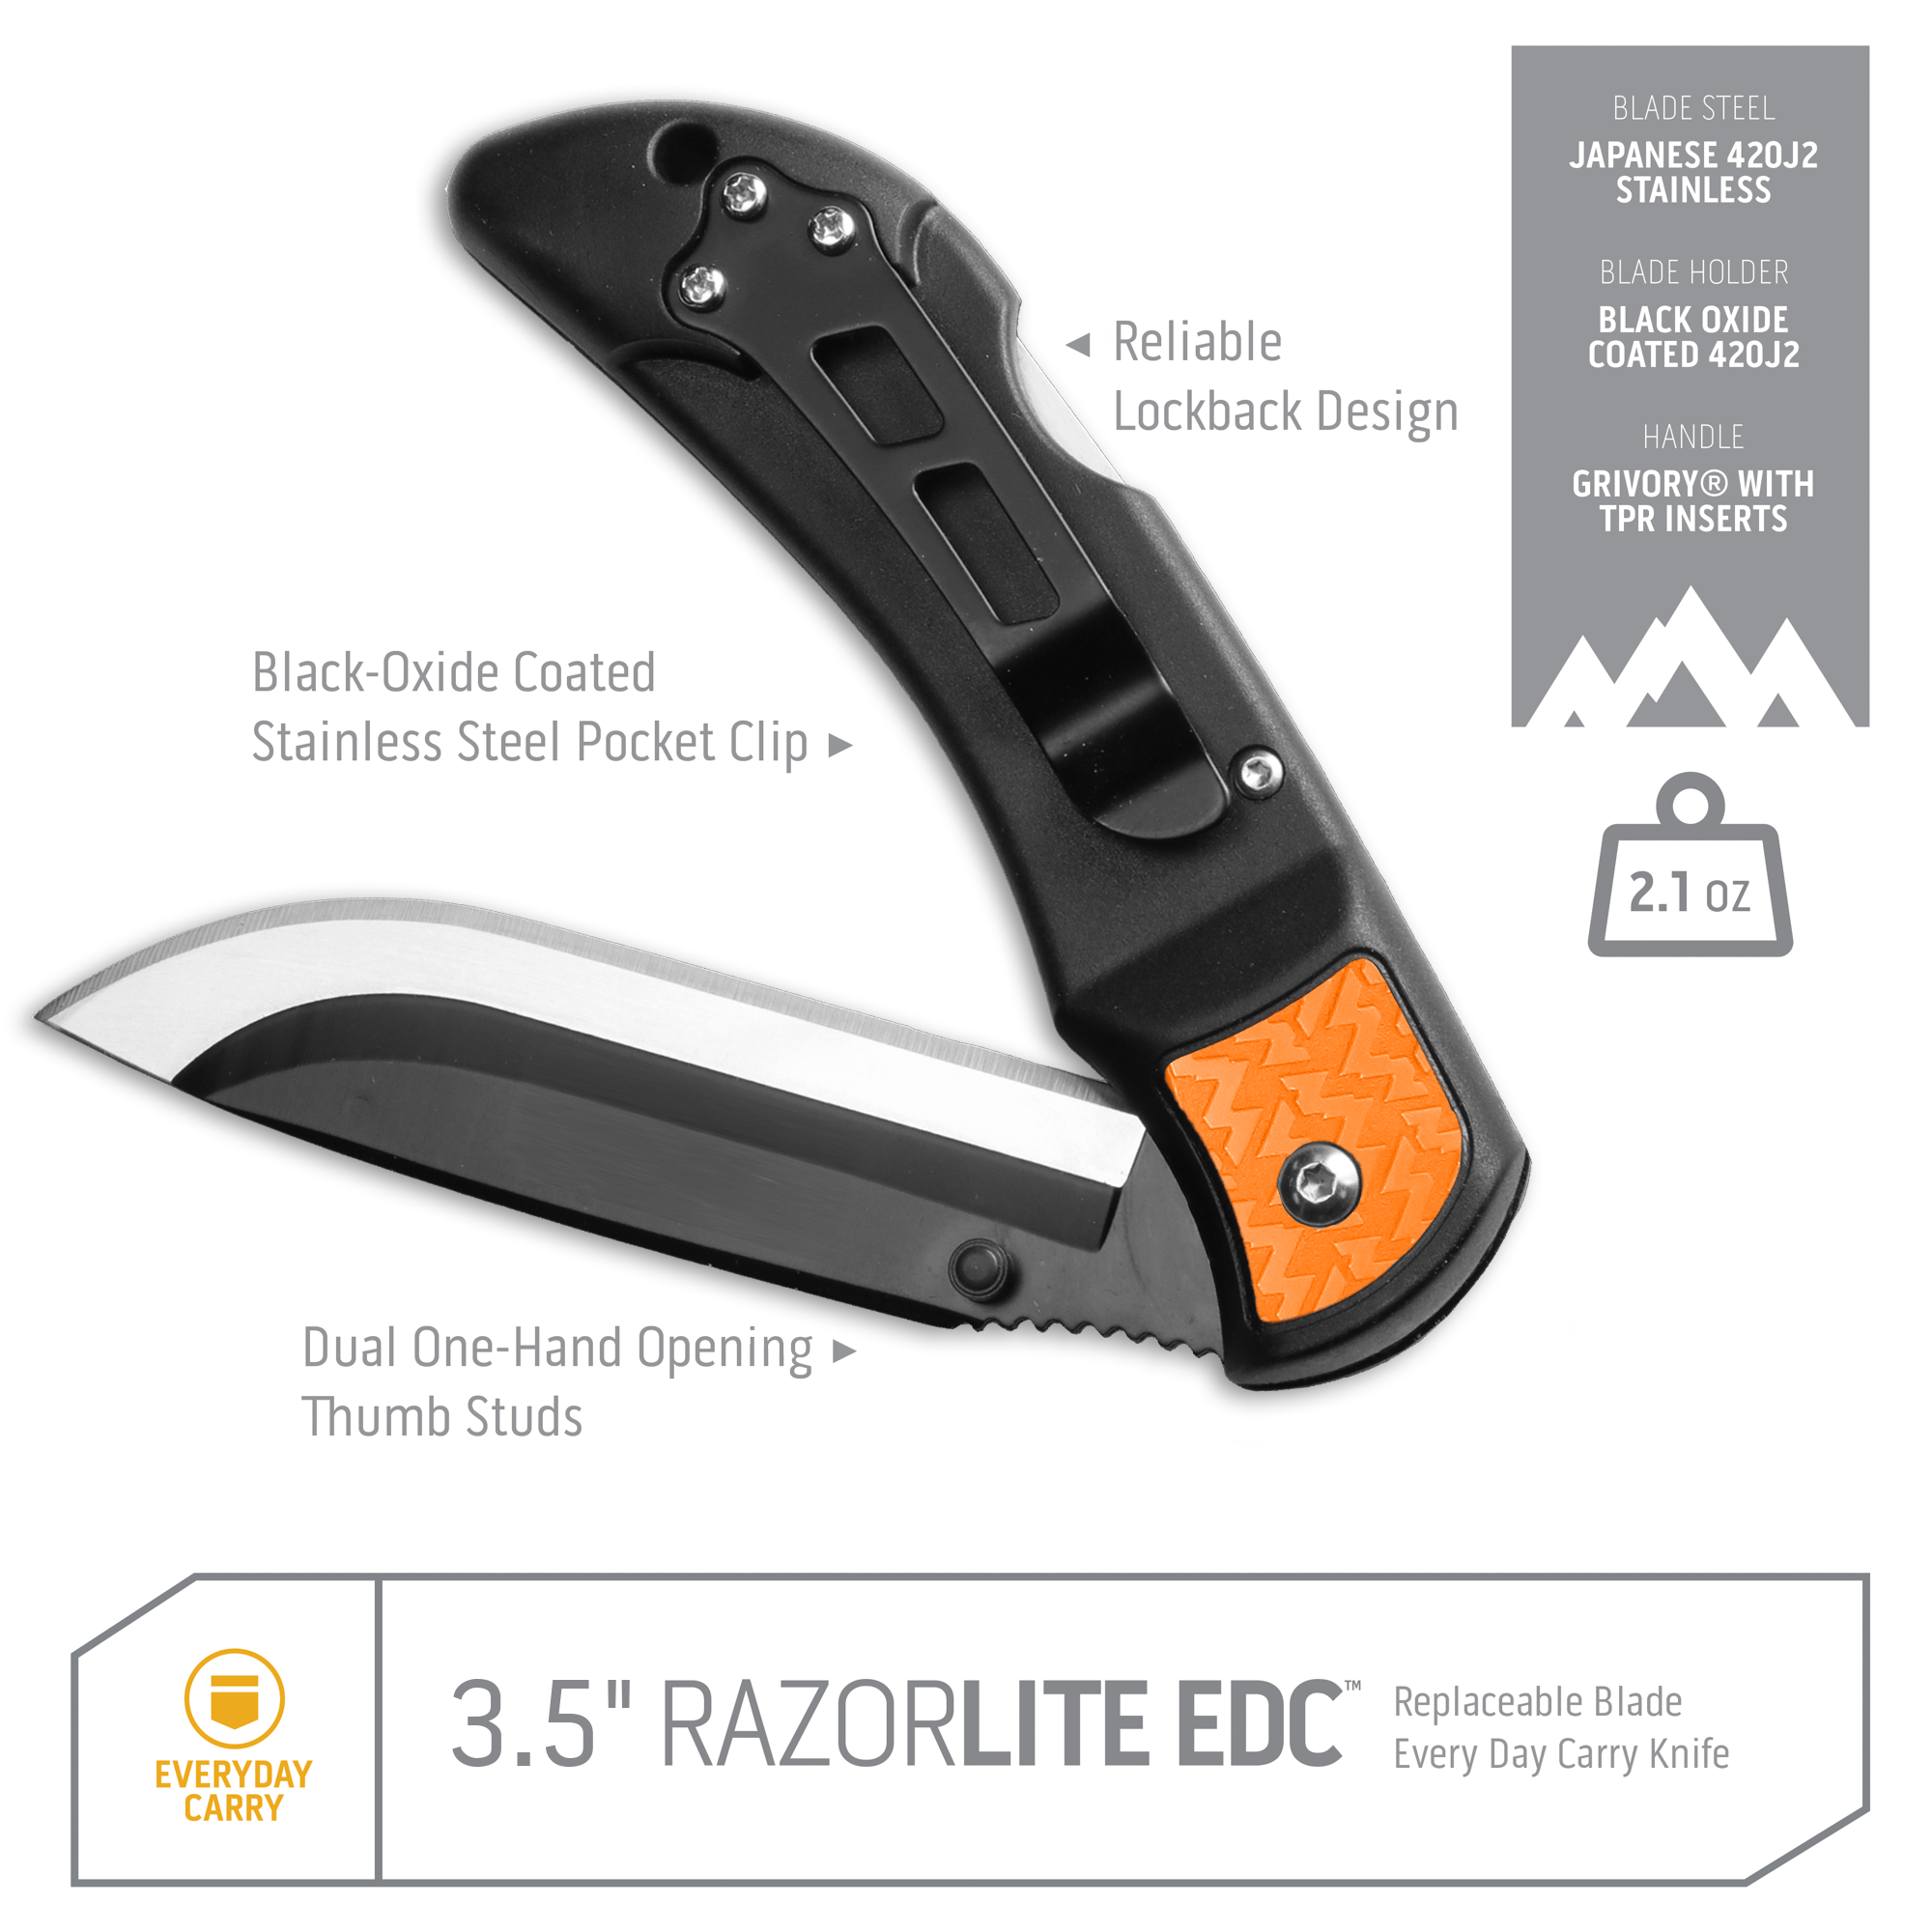 RazorLite EDC, Replaceable Blade EDC Knife